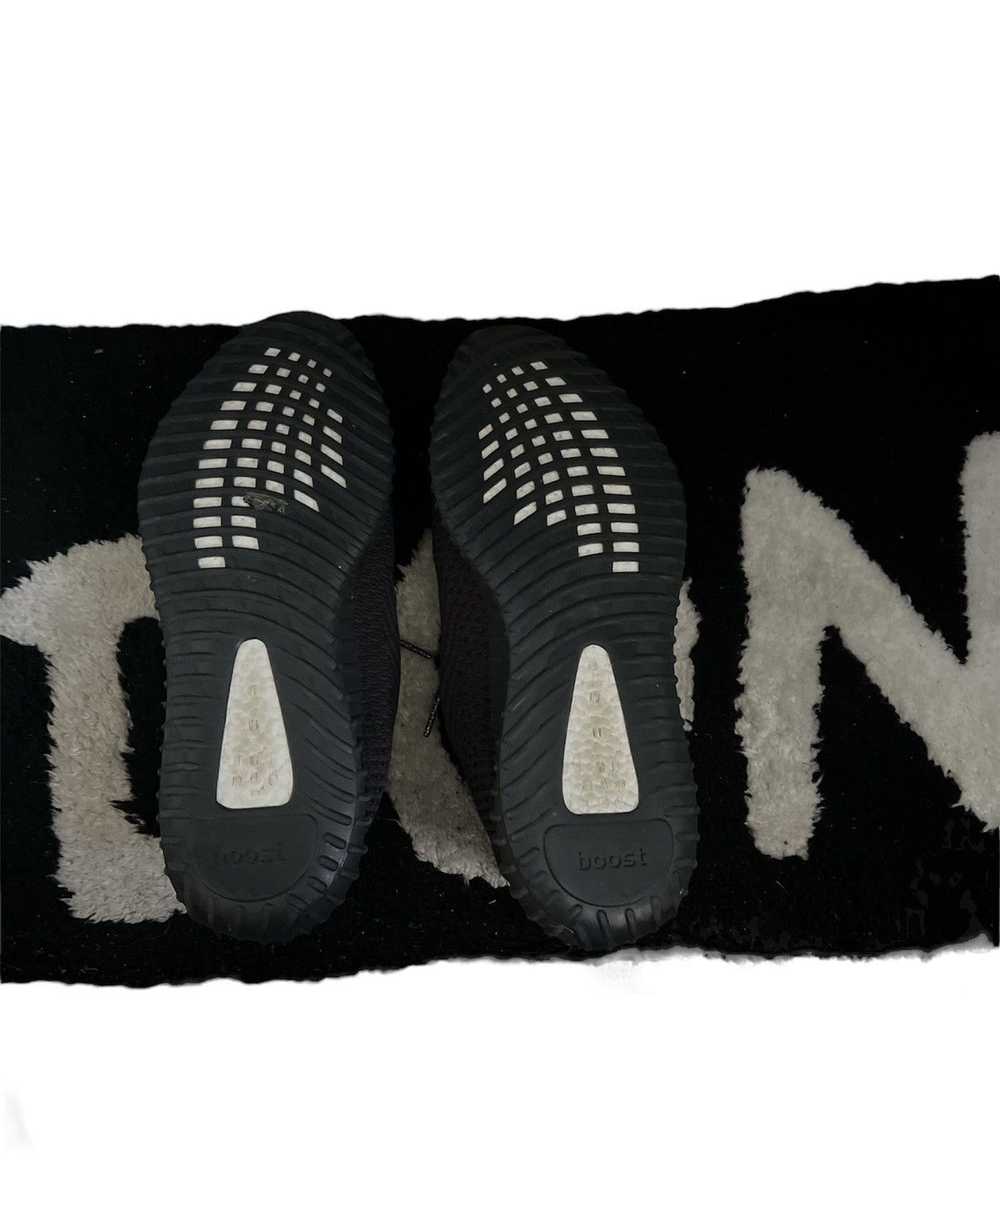 Adidas adidas Yeezy Boost 350 V2 onyx - image 4